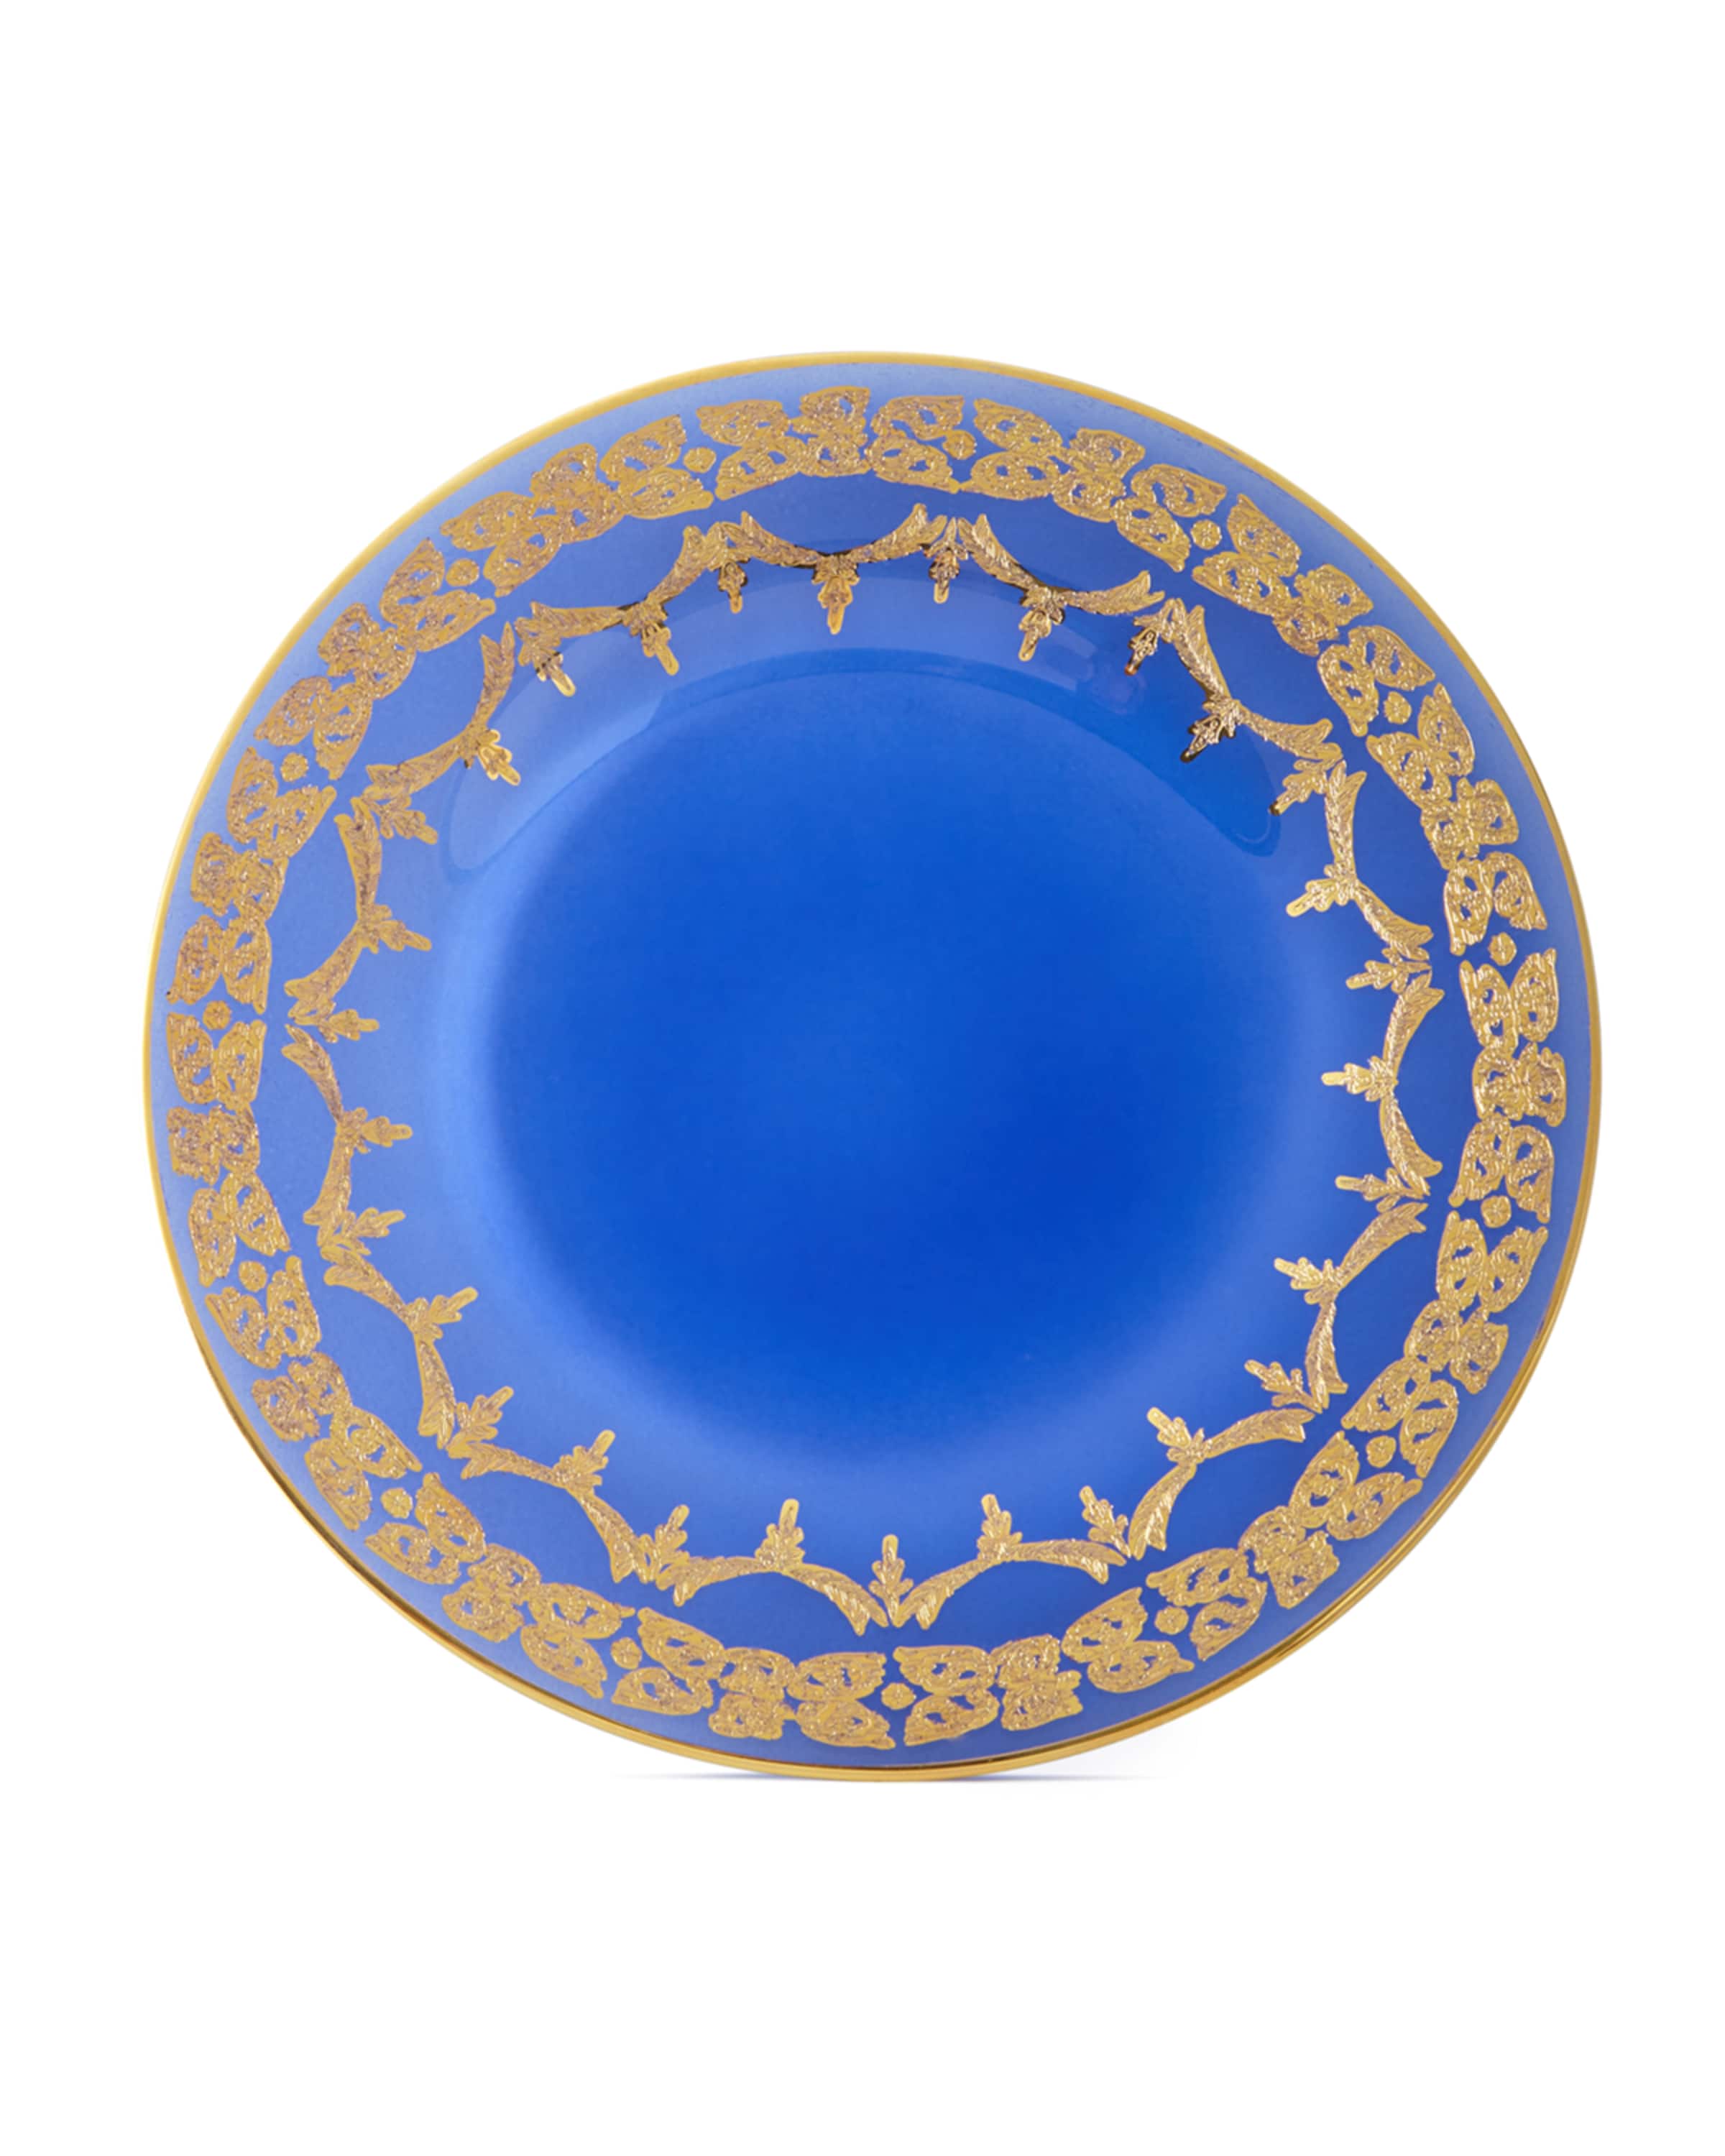 Neiman Marcus Blue Oro Bello Dinner Plates, Set of 4